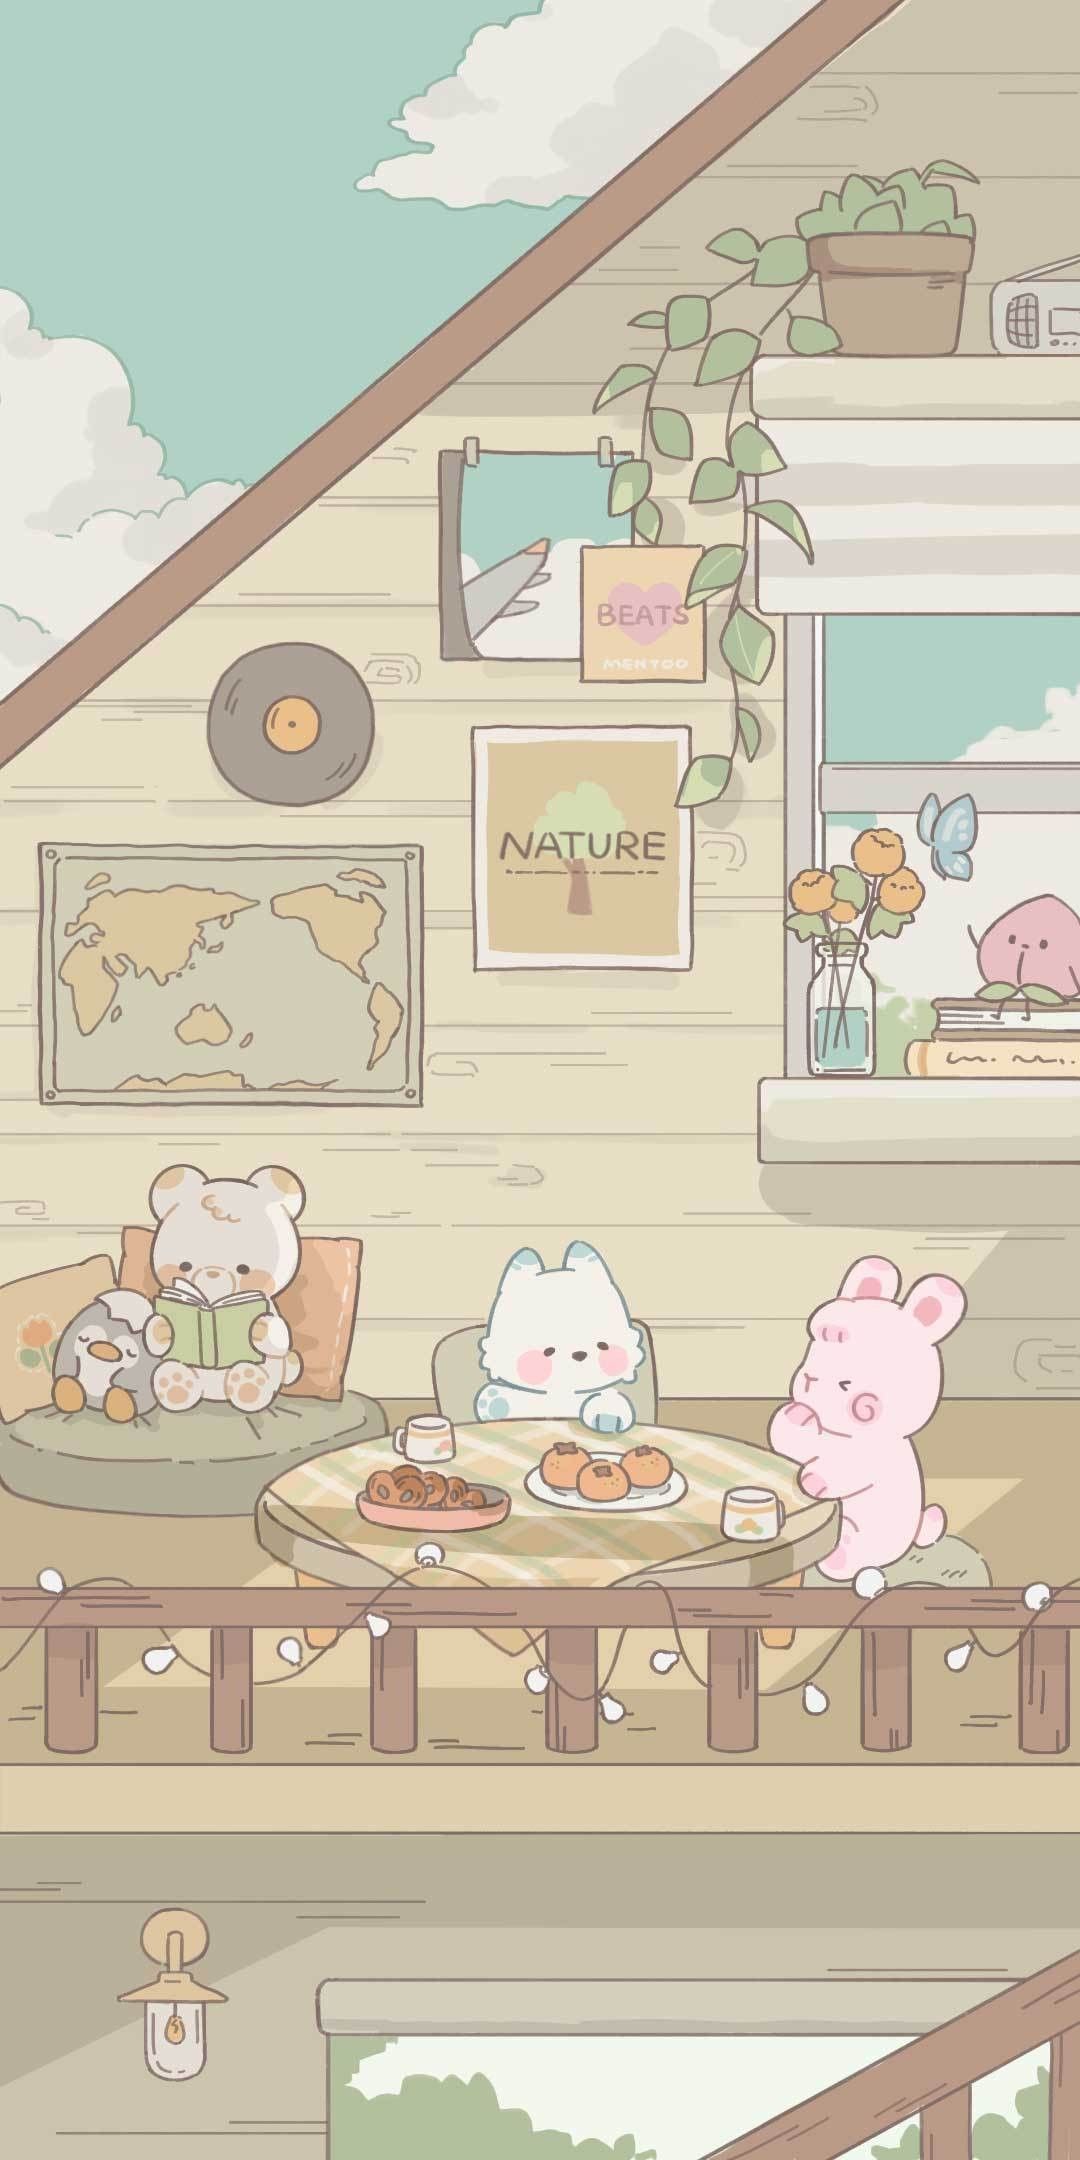 IPhone wallpaper of a cartoon cat and rabbit sitting at a table - Kawaii